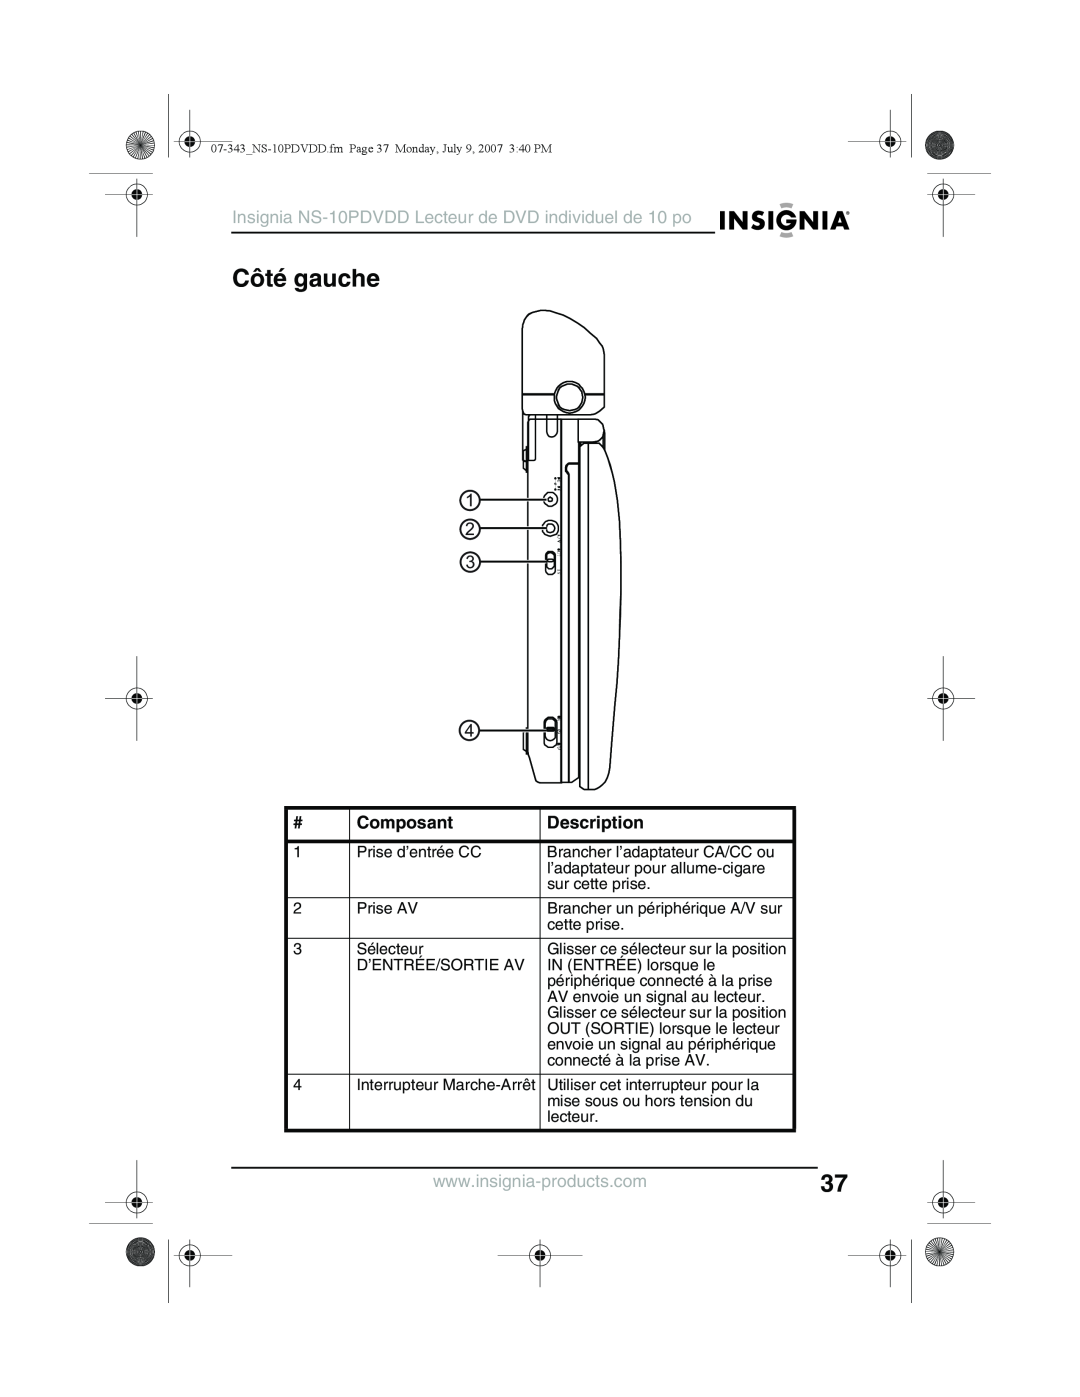 Insignia manual Côté gauche, Insignia NS-10PDVDD Lecteur de DVD individuel de 10 po, Composant, Description 